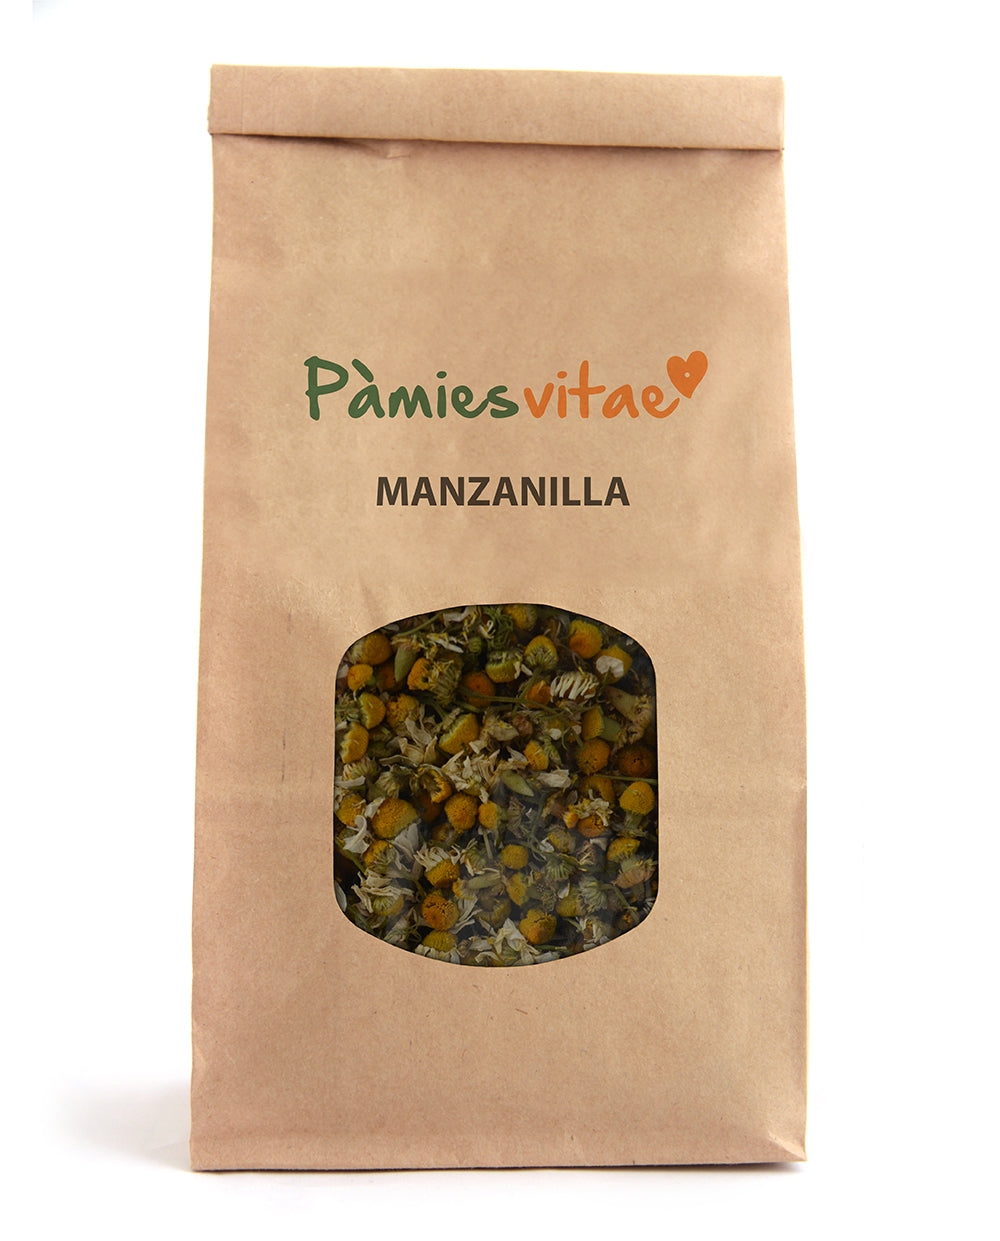 CAMAMILLA/MANZANILLA - Matricaria chamomilla